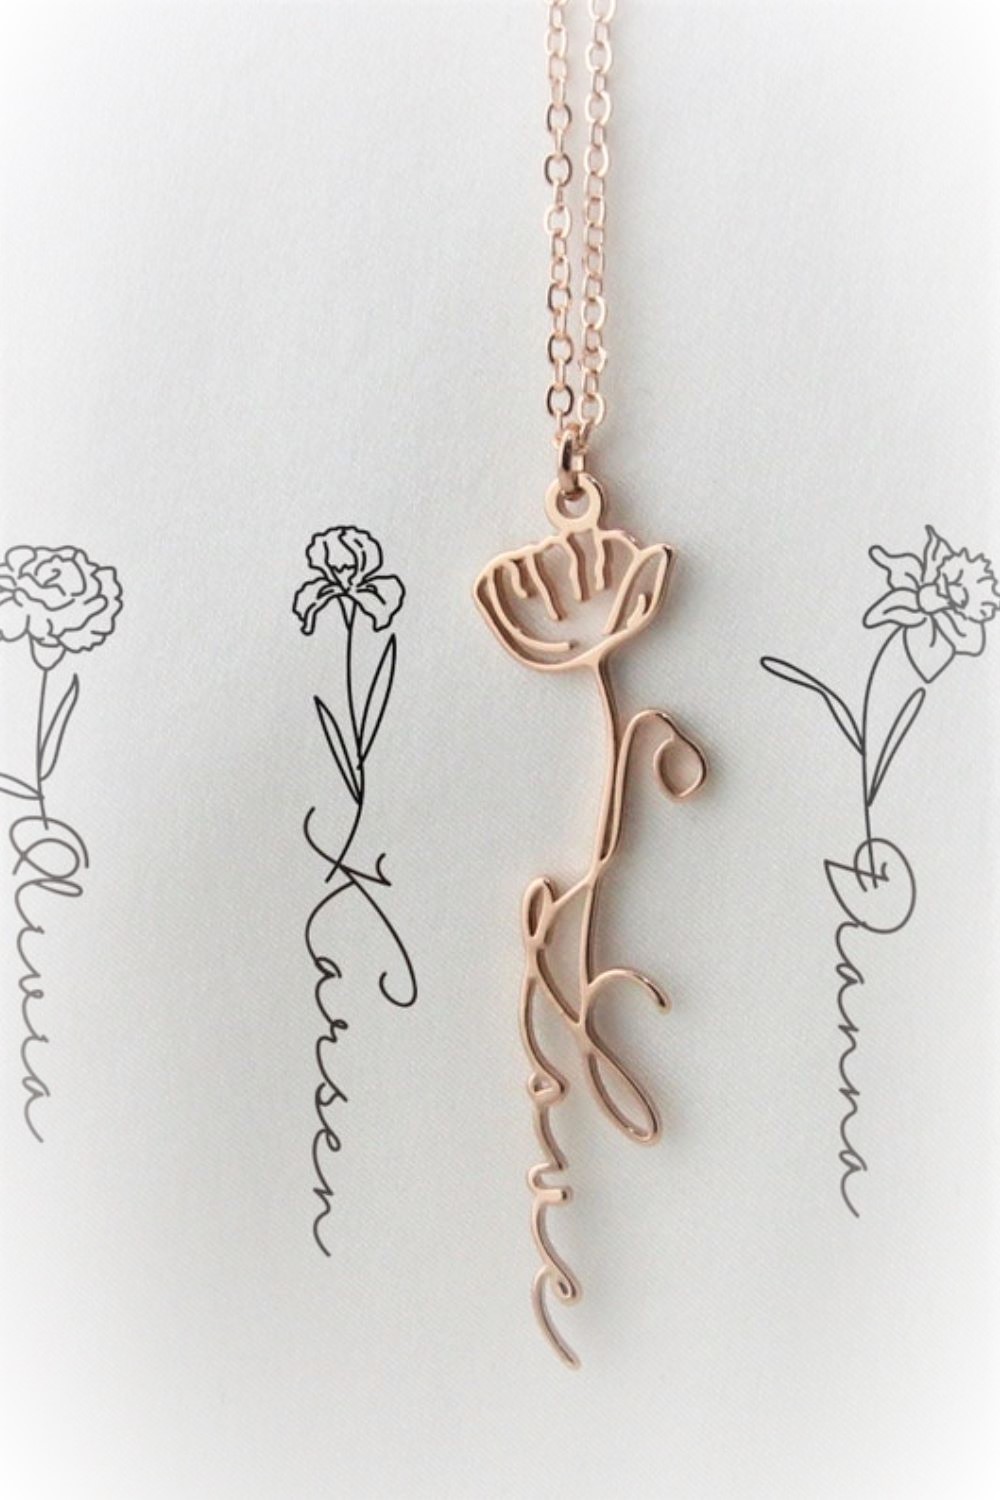 Custom Name Necklace with Birth FlowerCustom Name Necklace with Birth Flower